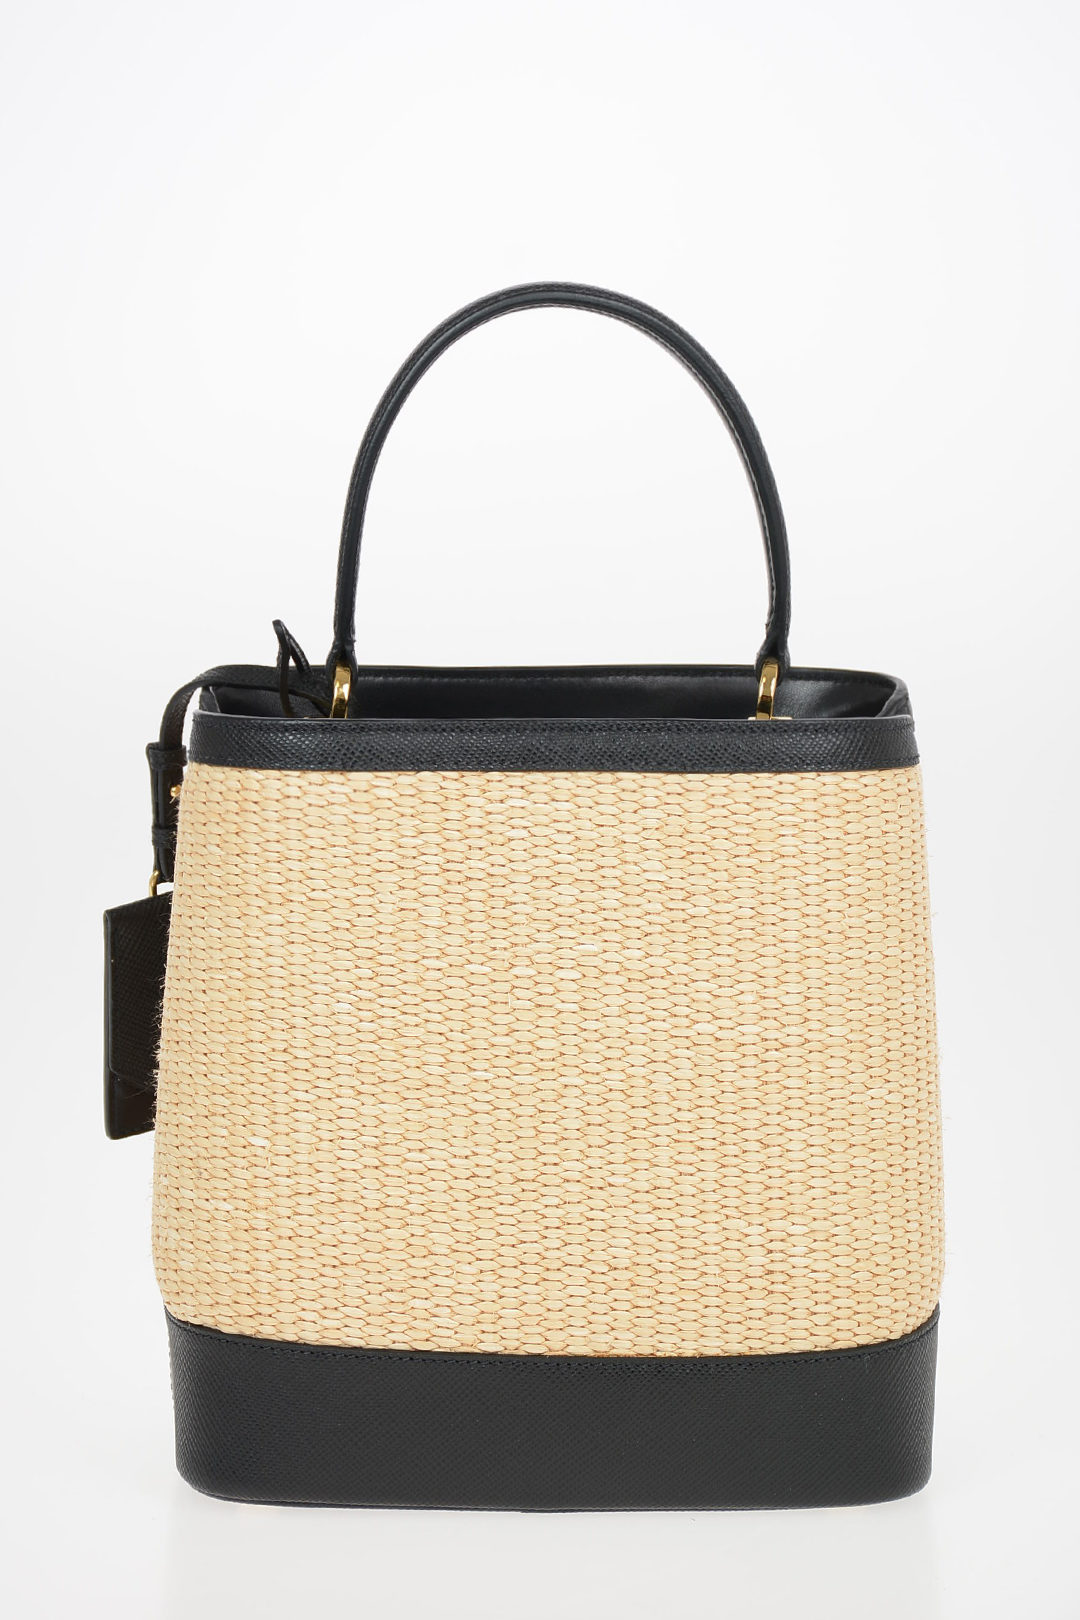 Prada Straw Bucket Bag with Saffiano Leather Trimmings women - Glamood ...